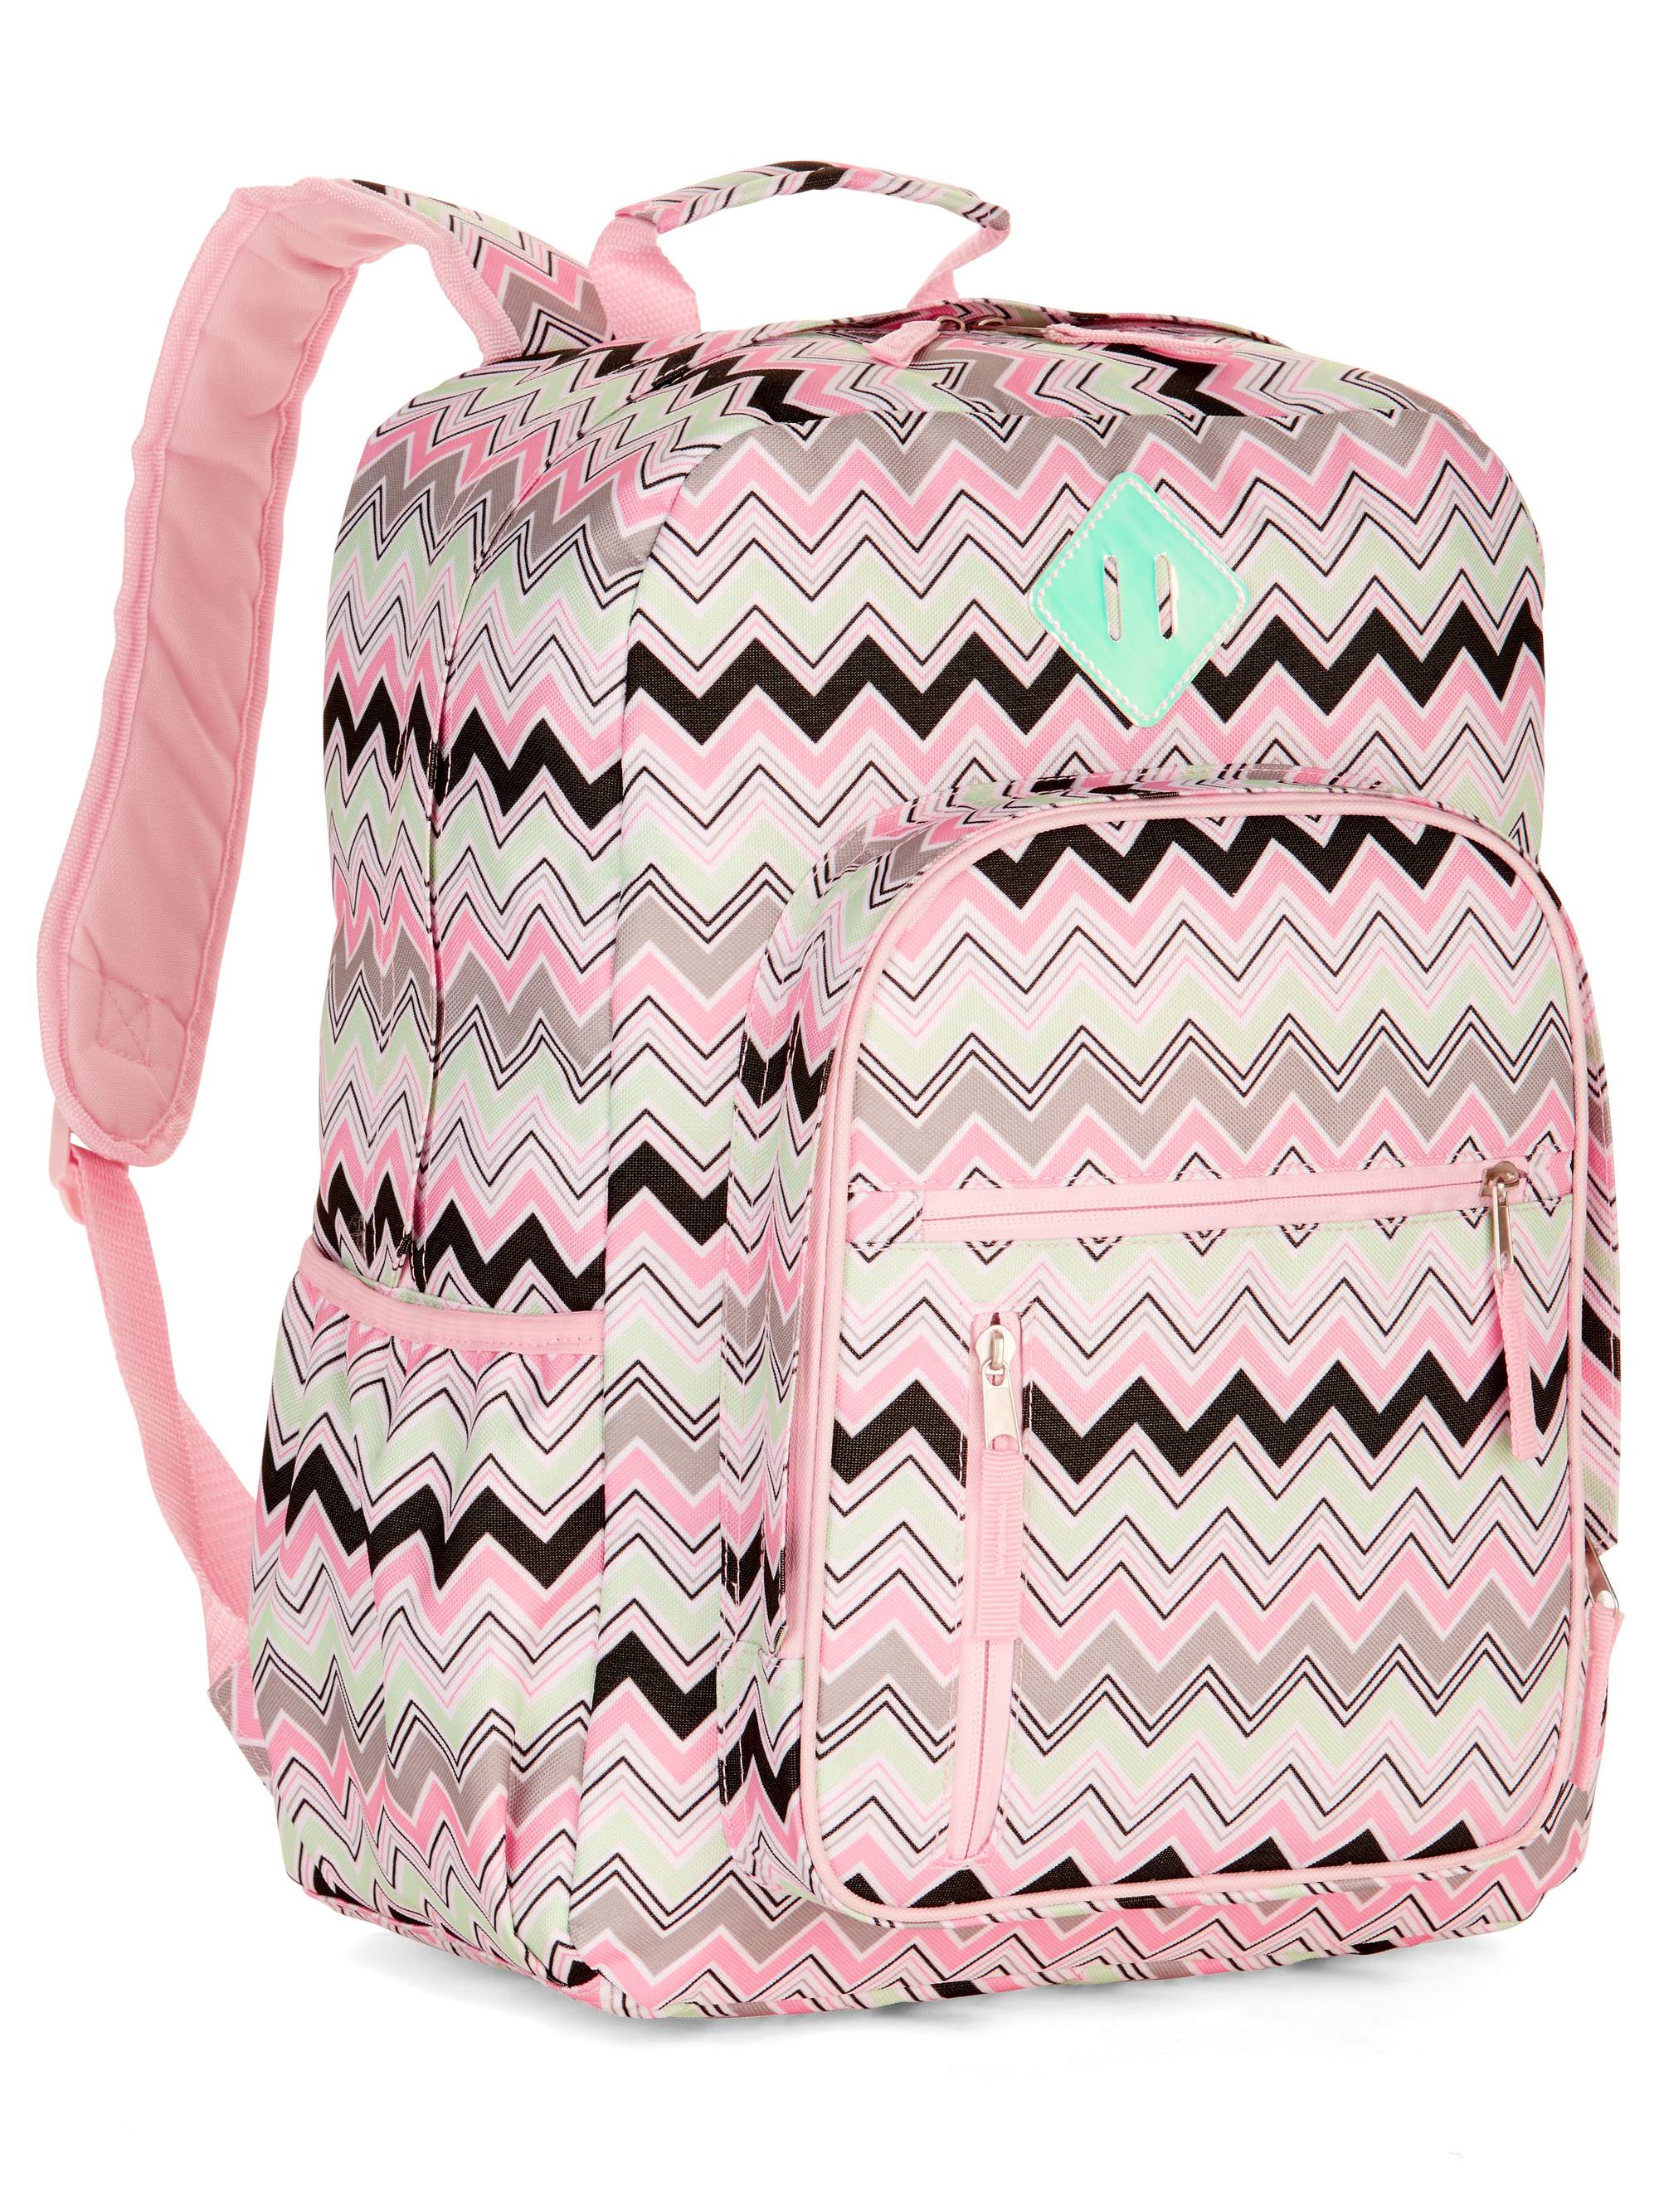 No Boundaries Girls School Backpack - image 1 of 2